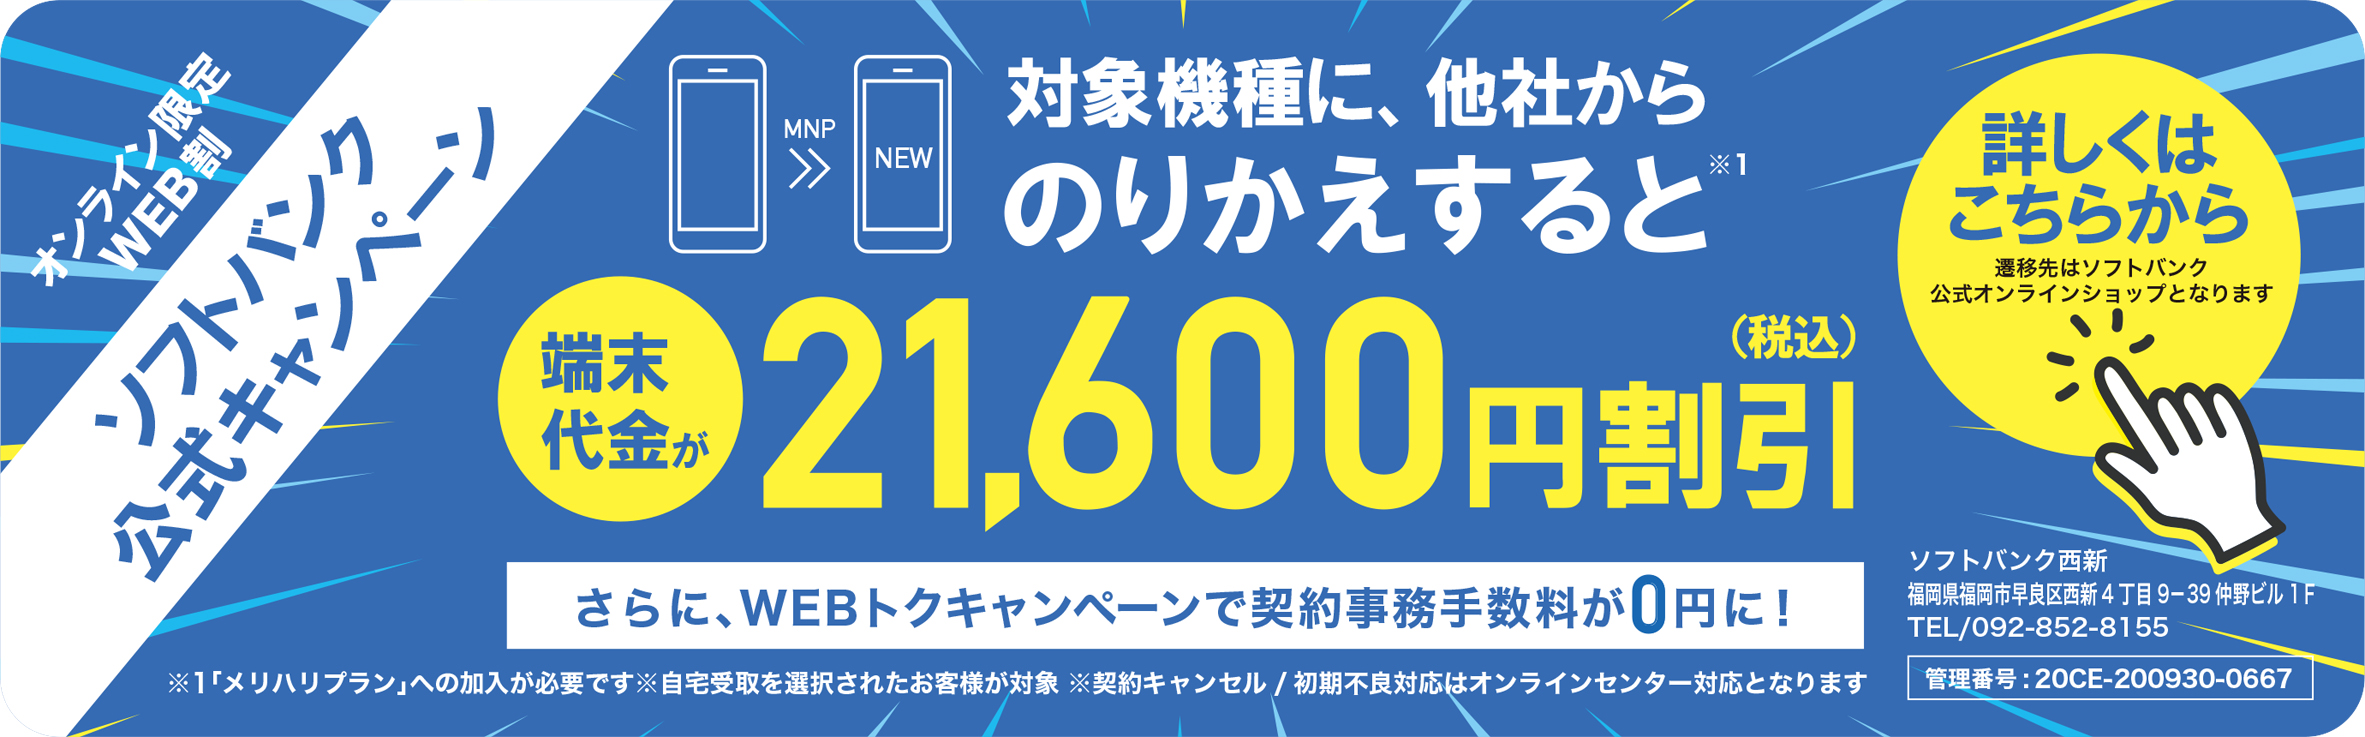 Softbank 西新 ショップ情報 Jng ジャパンネットワークグループ